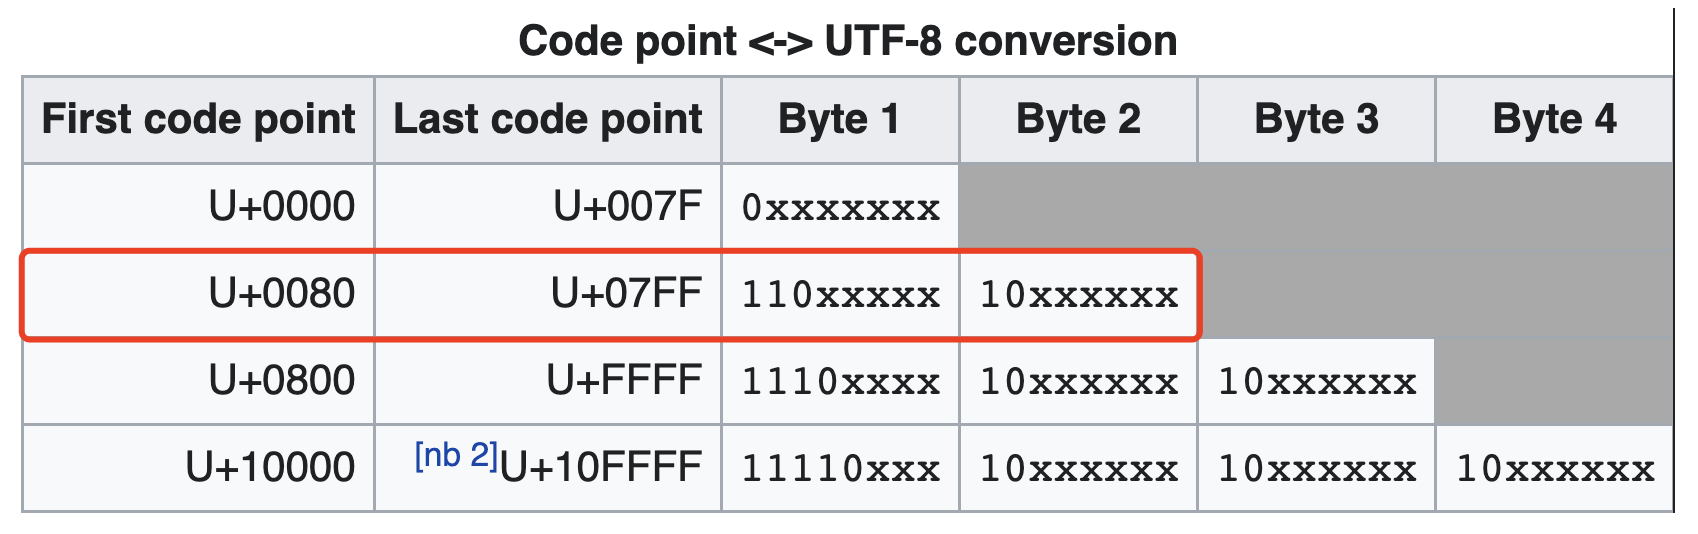 code point utf8 conversion